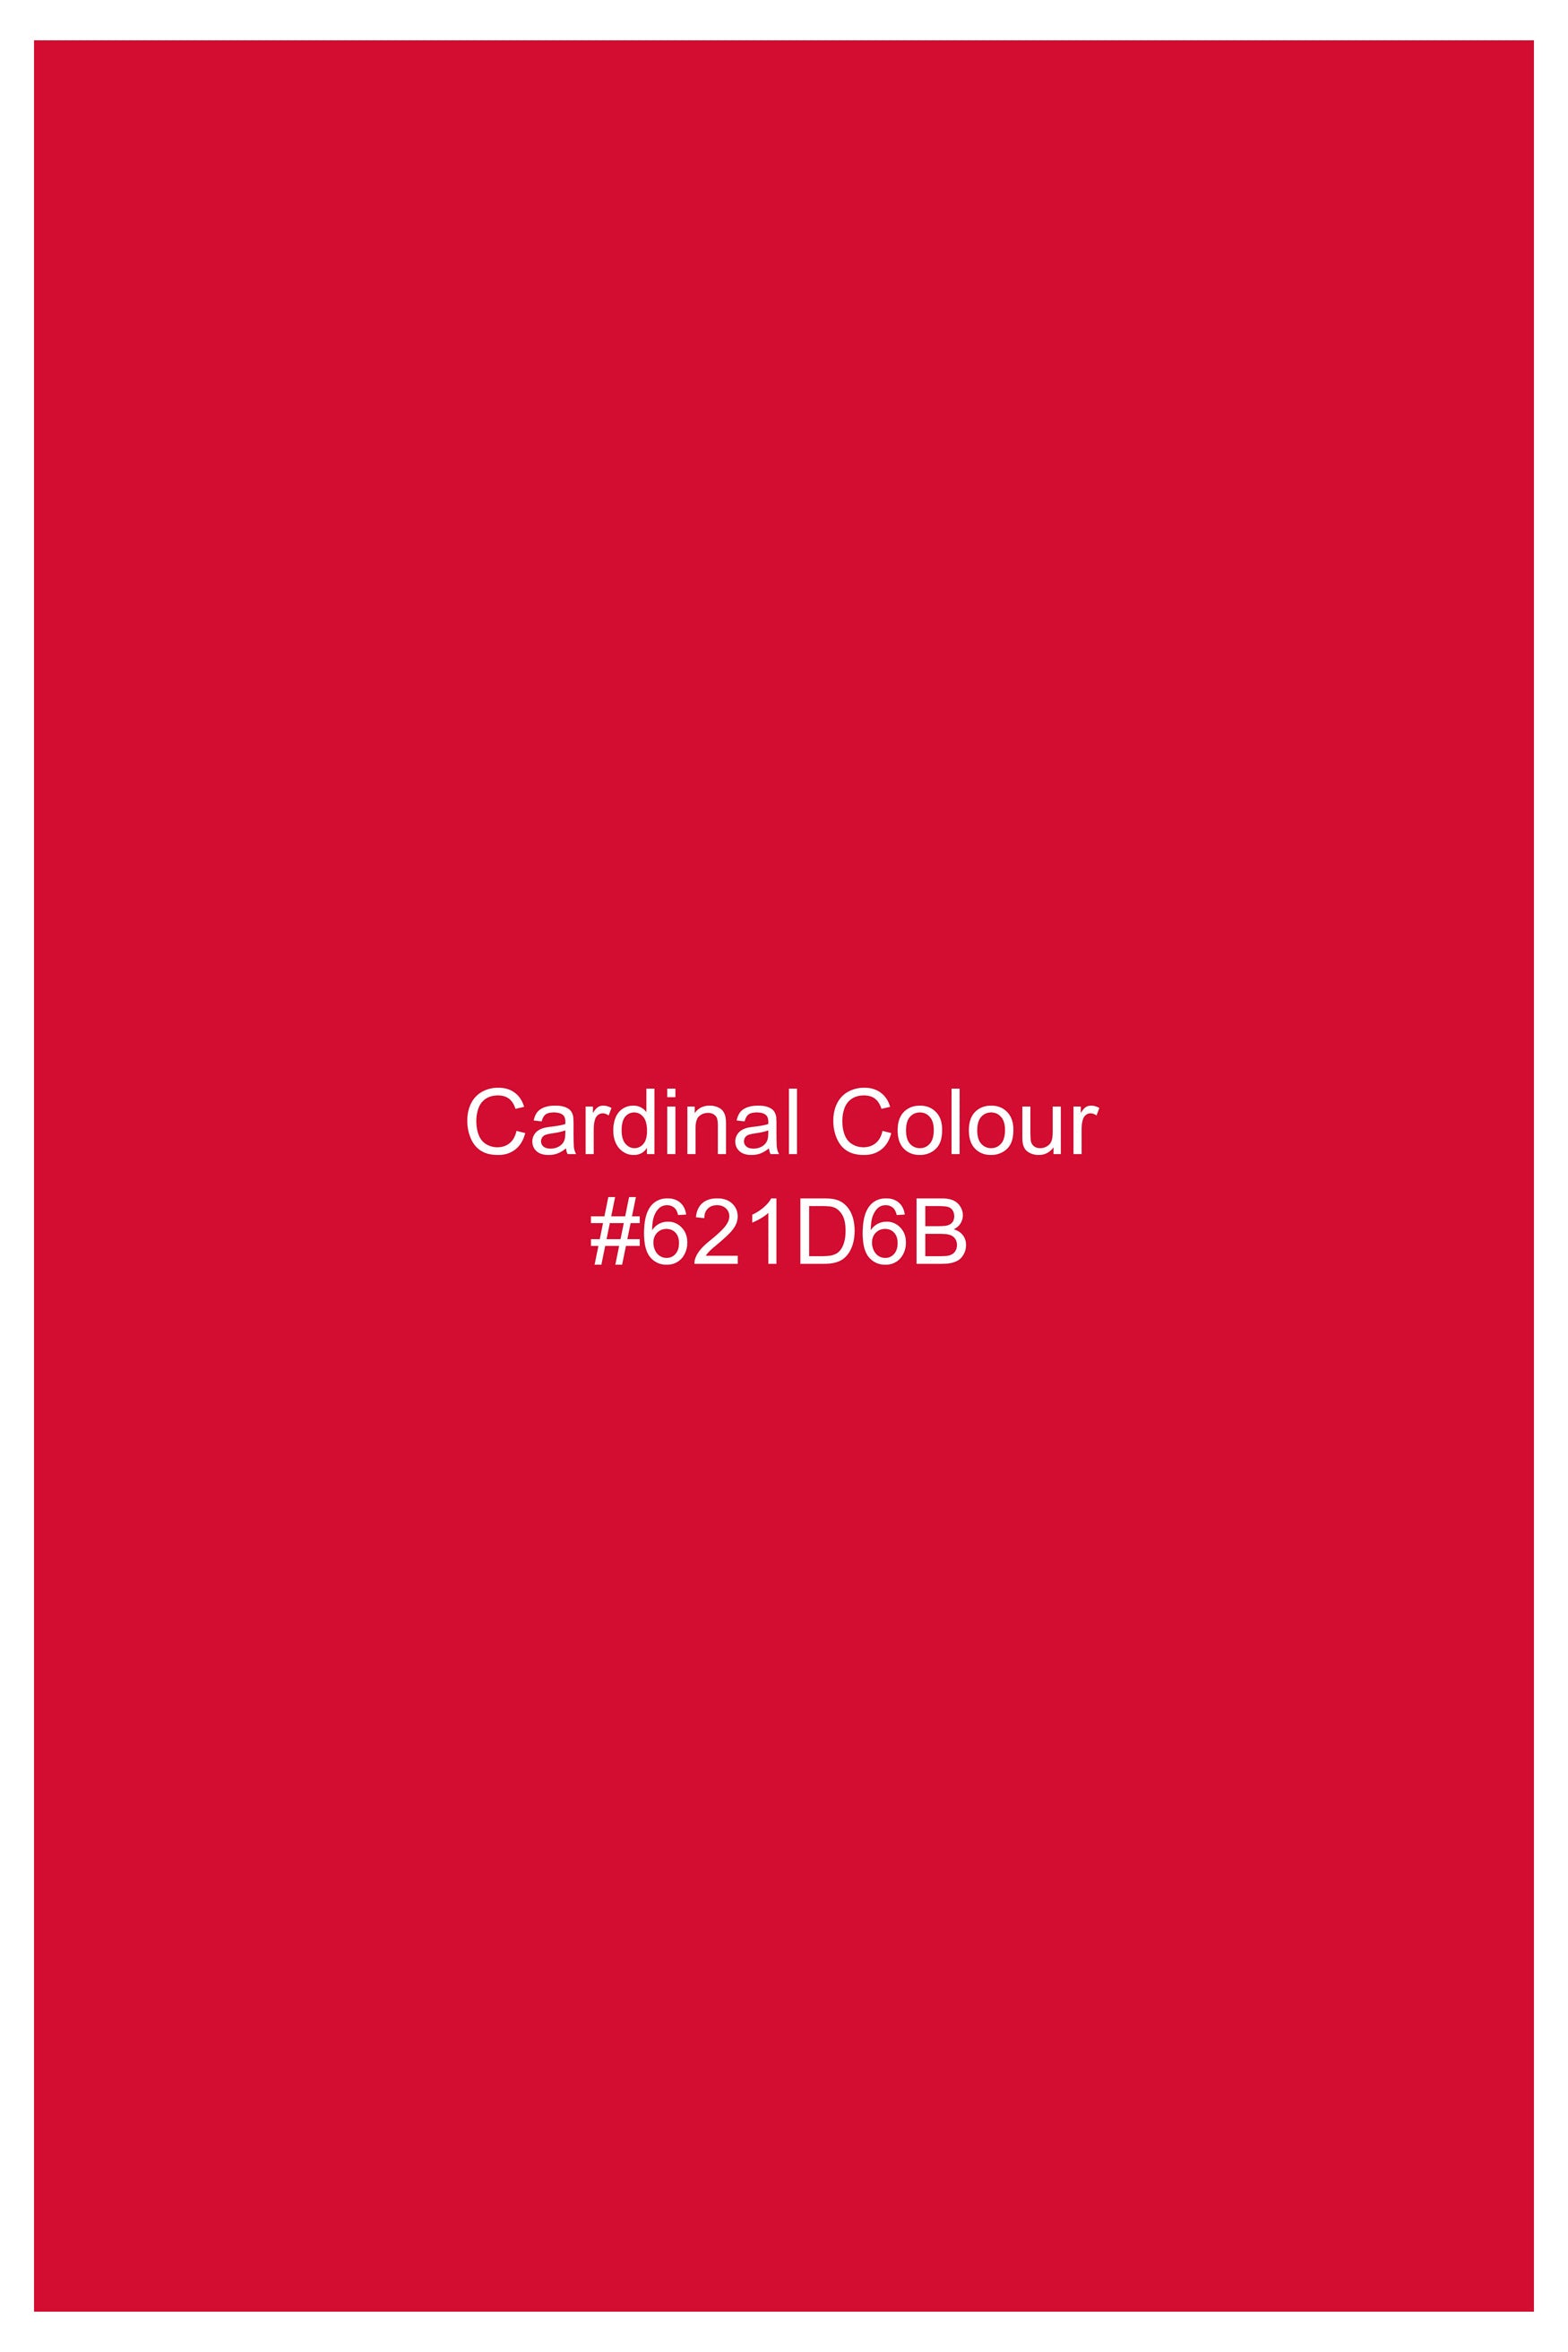 Cardinal Red Subtle Sheen Super Soft Premium Cotton Shirt 11750-38, 11750-H-38, 11750-39, 11750-H-39, 11750-40, 11750-H-40, 11750-42, 11750-H-42, 11750-44, 11750-H-44, 11750-46, 11750-H-46, 11750-48, 11750-H-48, 11750-50, 11750-H-50, 11750-52, 11750-H-52